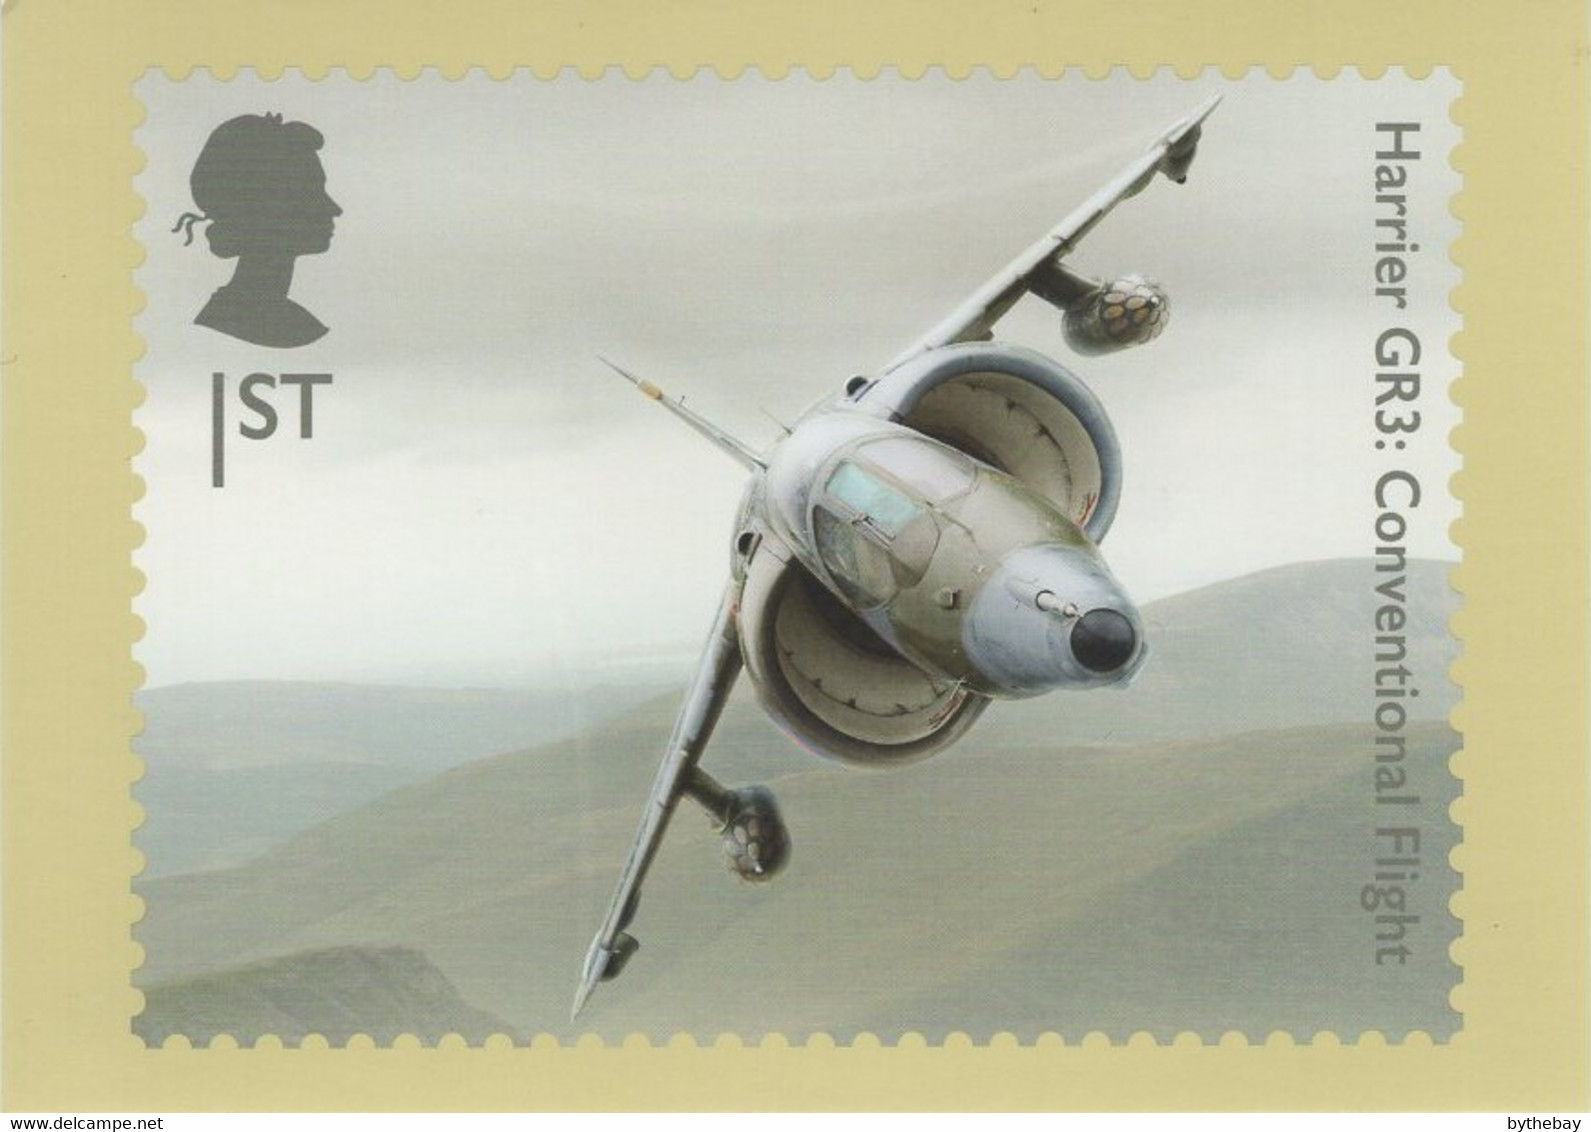 Great Britain 2019 PHQ Card Sc 3845b 1st Harrier GR3 Convential Flight - PHQ Cards